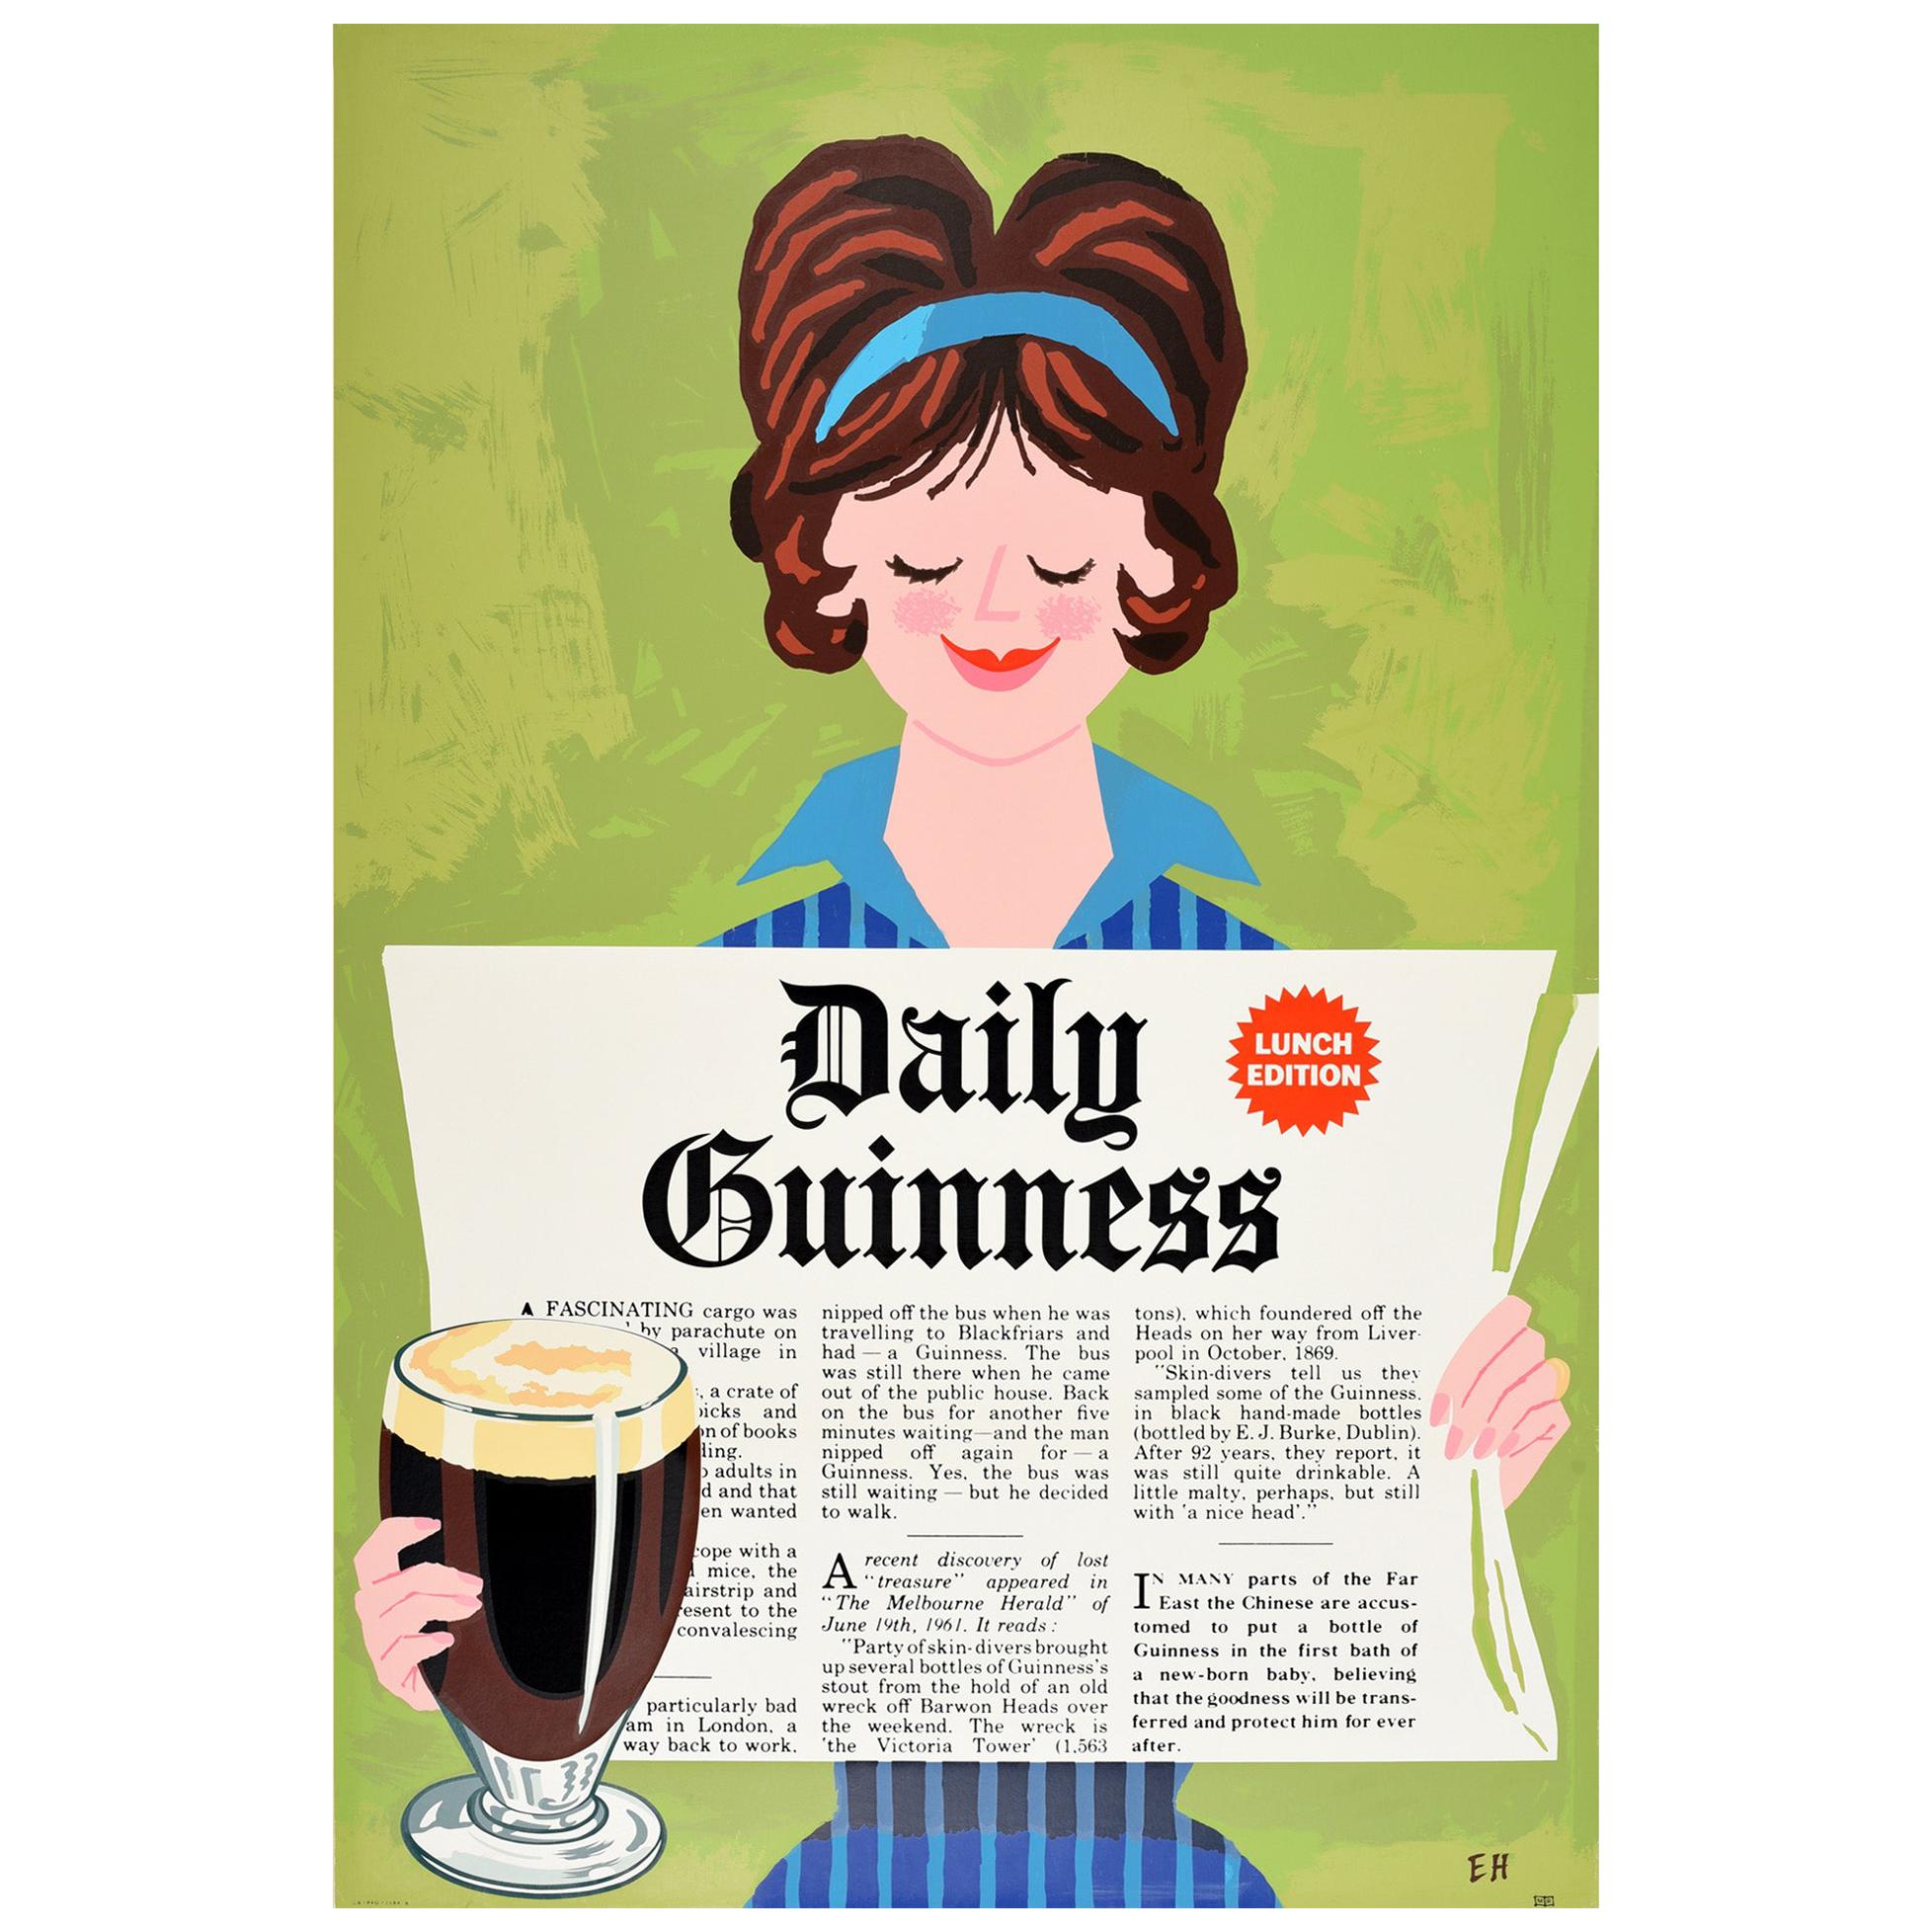 Original Vintage Poster Daily Guinness Newspaper Design Irish Stout Beer Drink